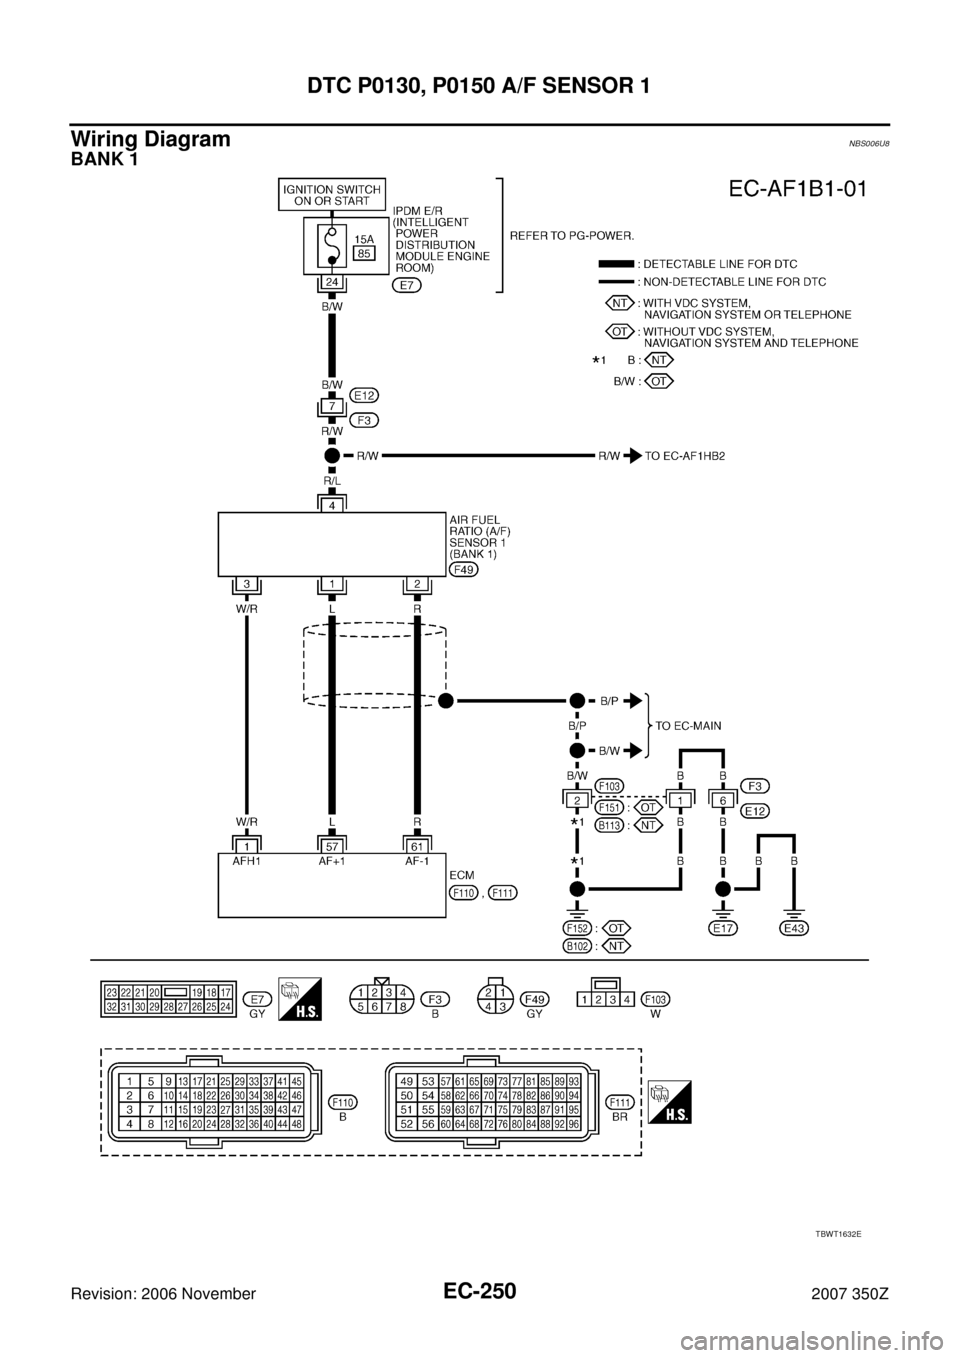 NISSAN 350Z 2007 Z33 Engine Control Service Manual EC-250
DTC P0130, P0150 A/F SENSOR 1
Revision: 2006 November2007 350Z
Wiring DiagramNBS006U8
BANK 1
TBWT1632E 